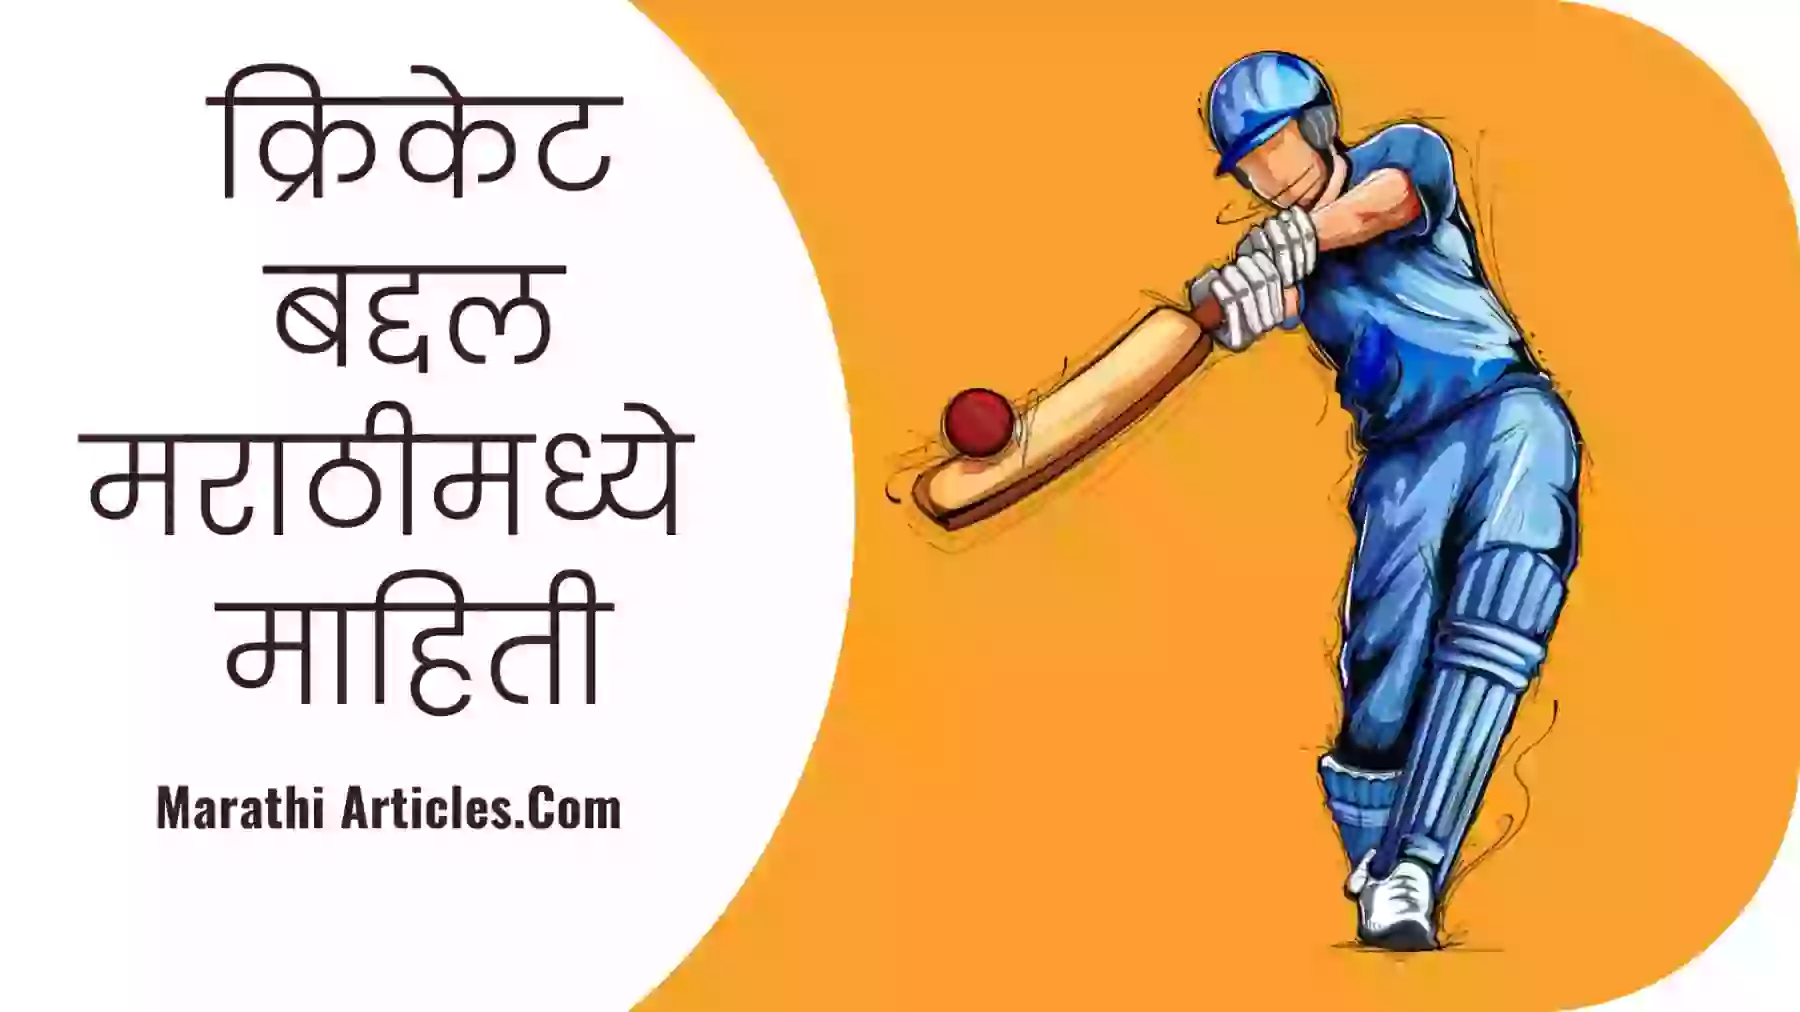 Information about cricket in Marathi